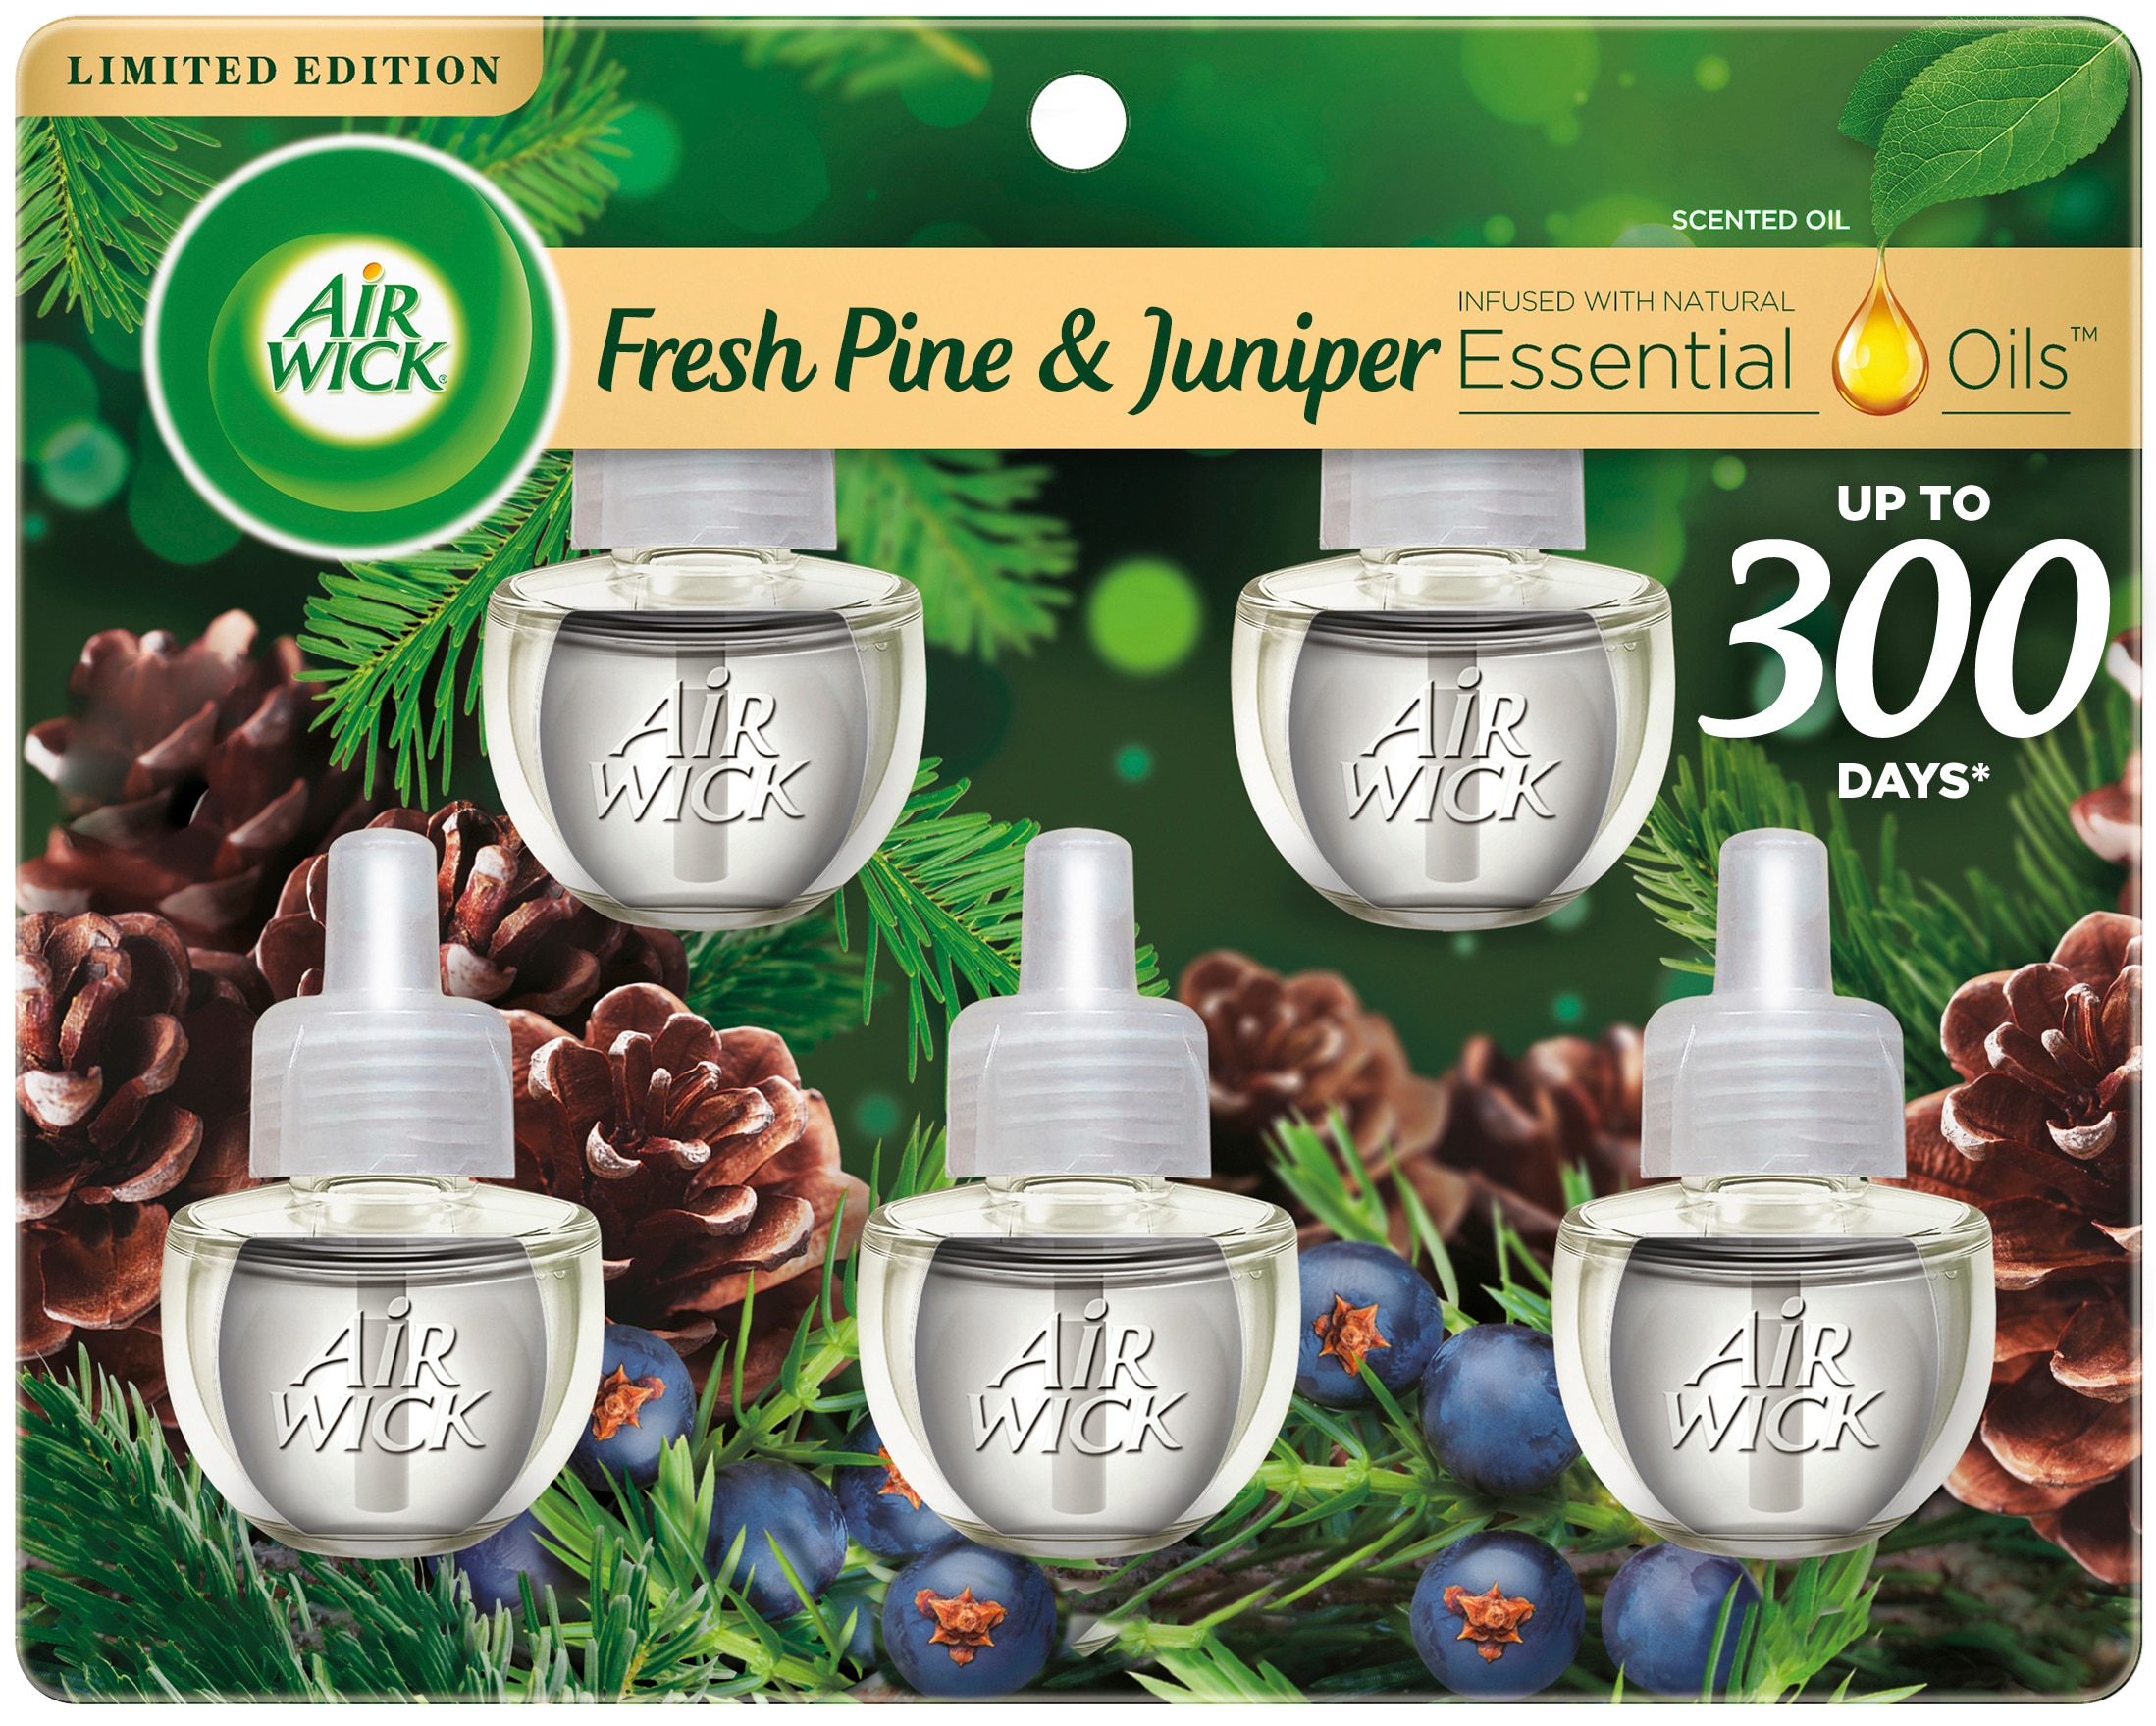 Febreze Wax Melts Air Freshener, Gain Original Scent, (4 packs, 6 count  each) 